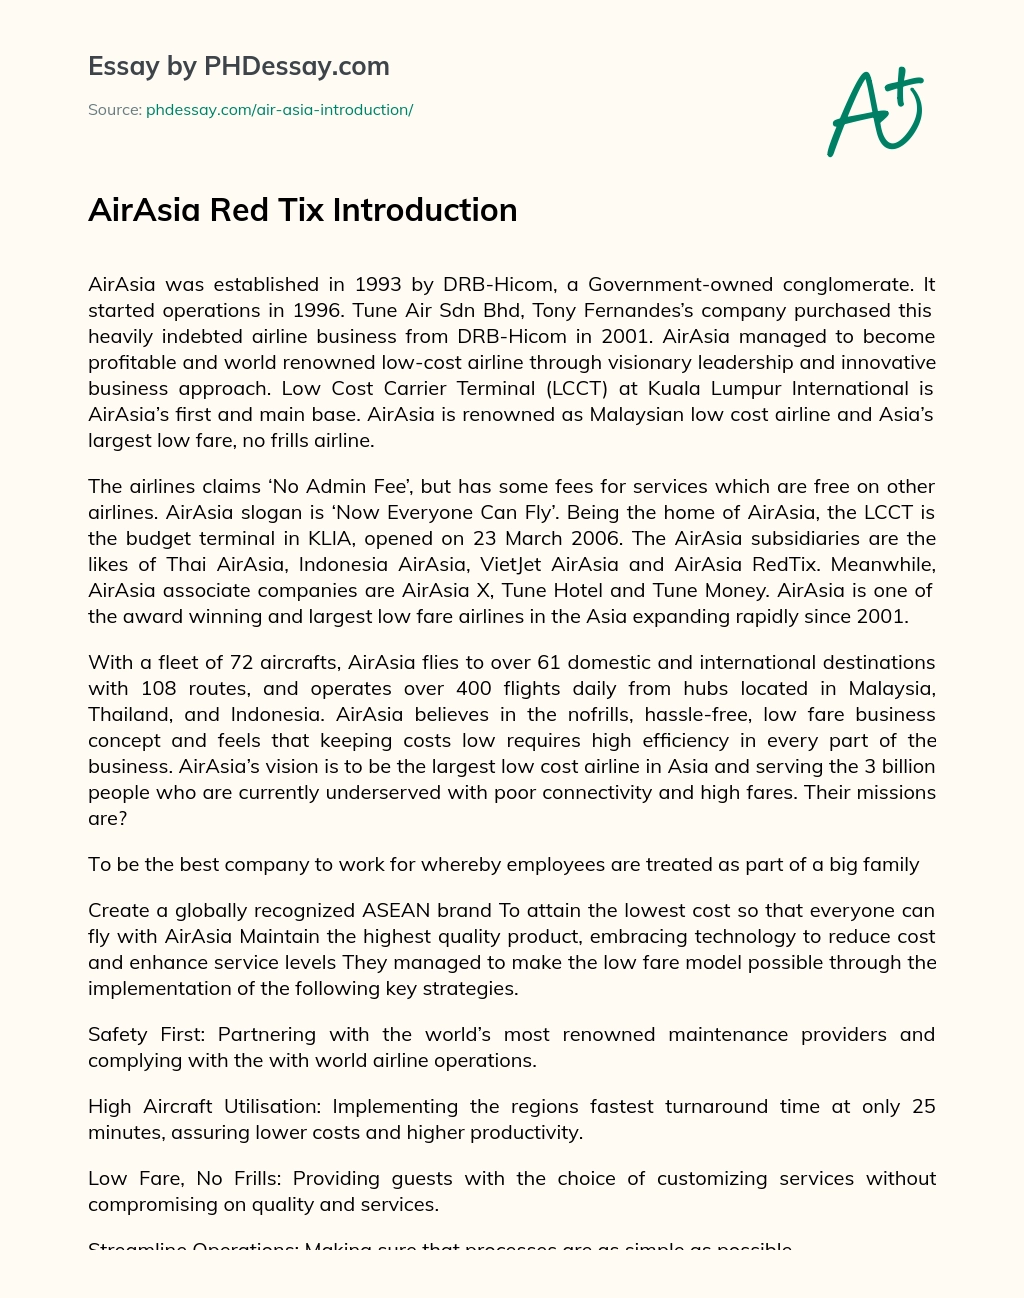 AirAsia Red Tix Introduction essay